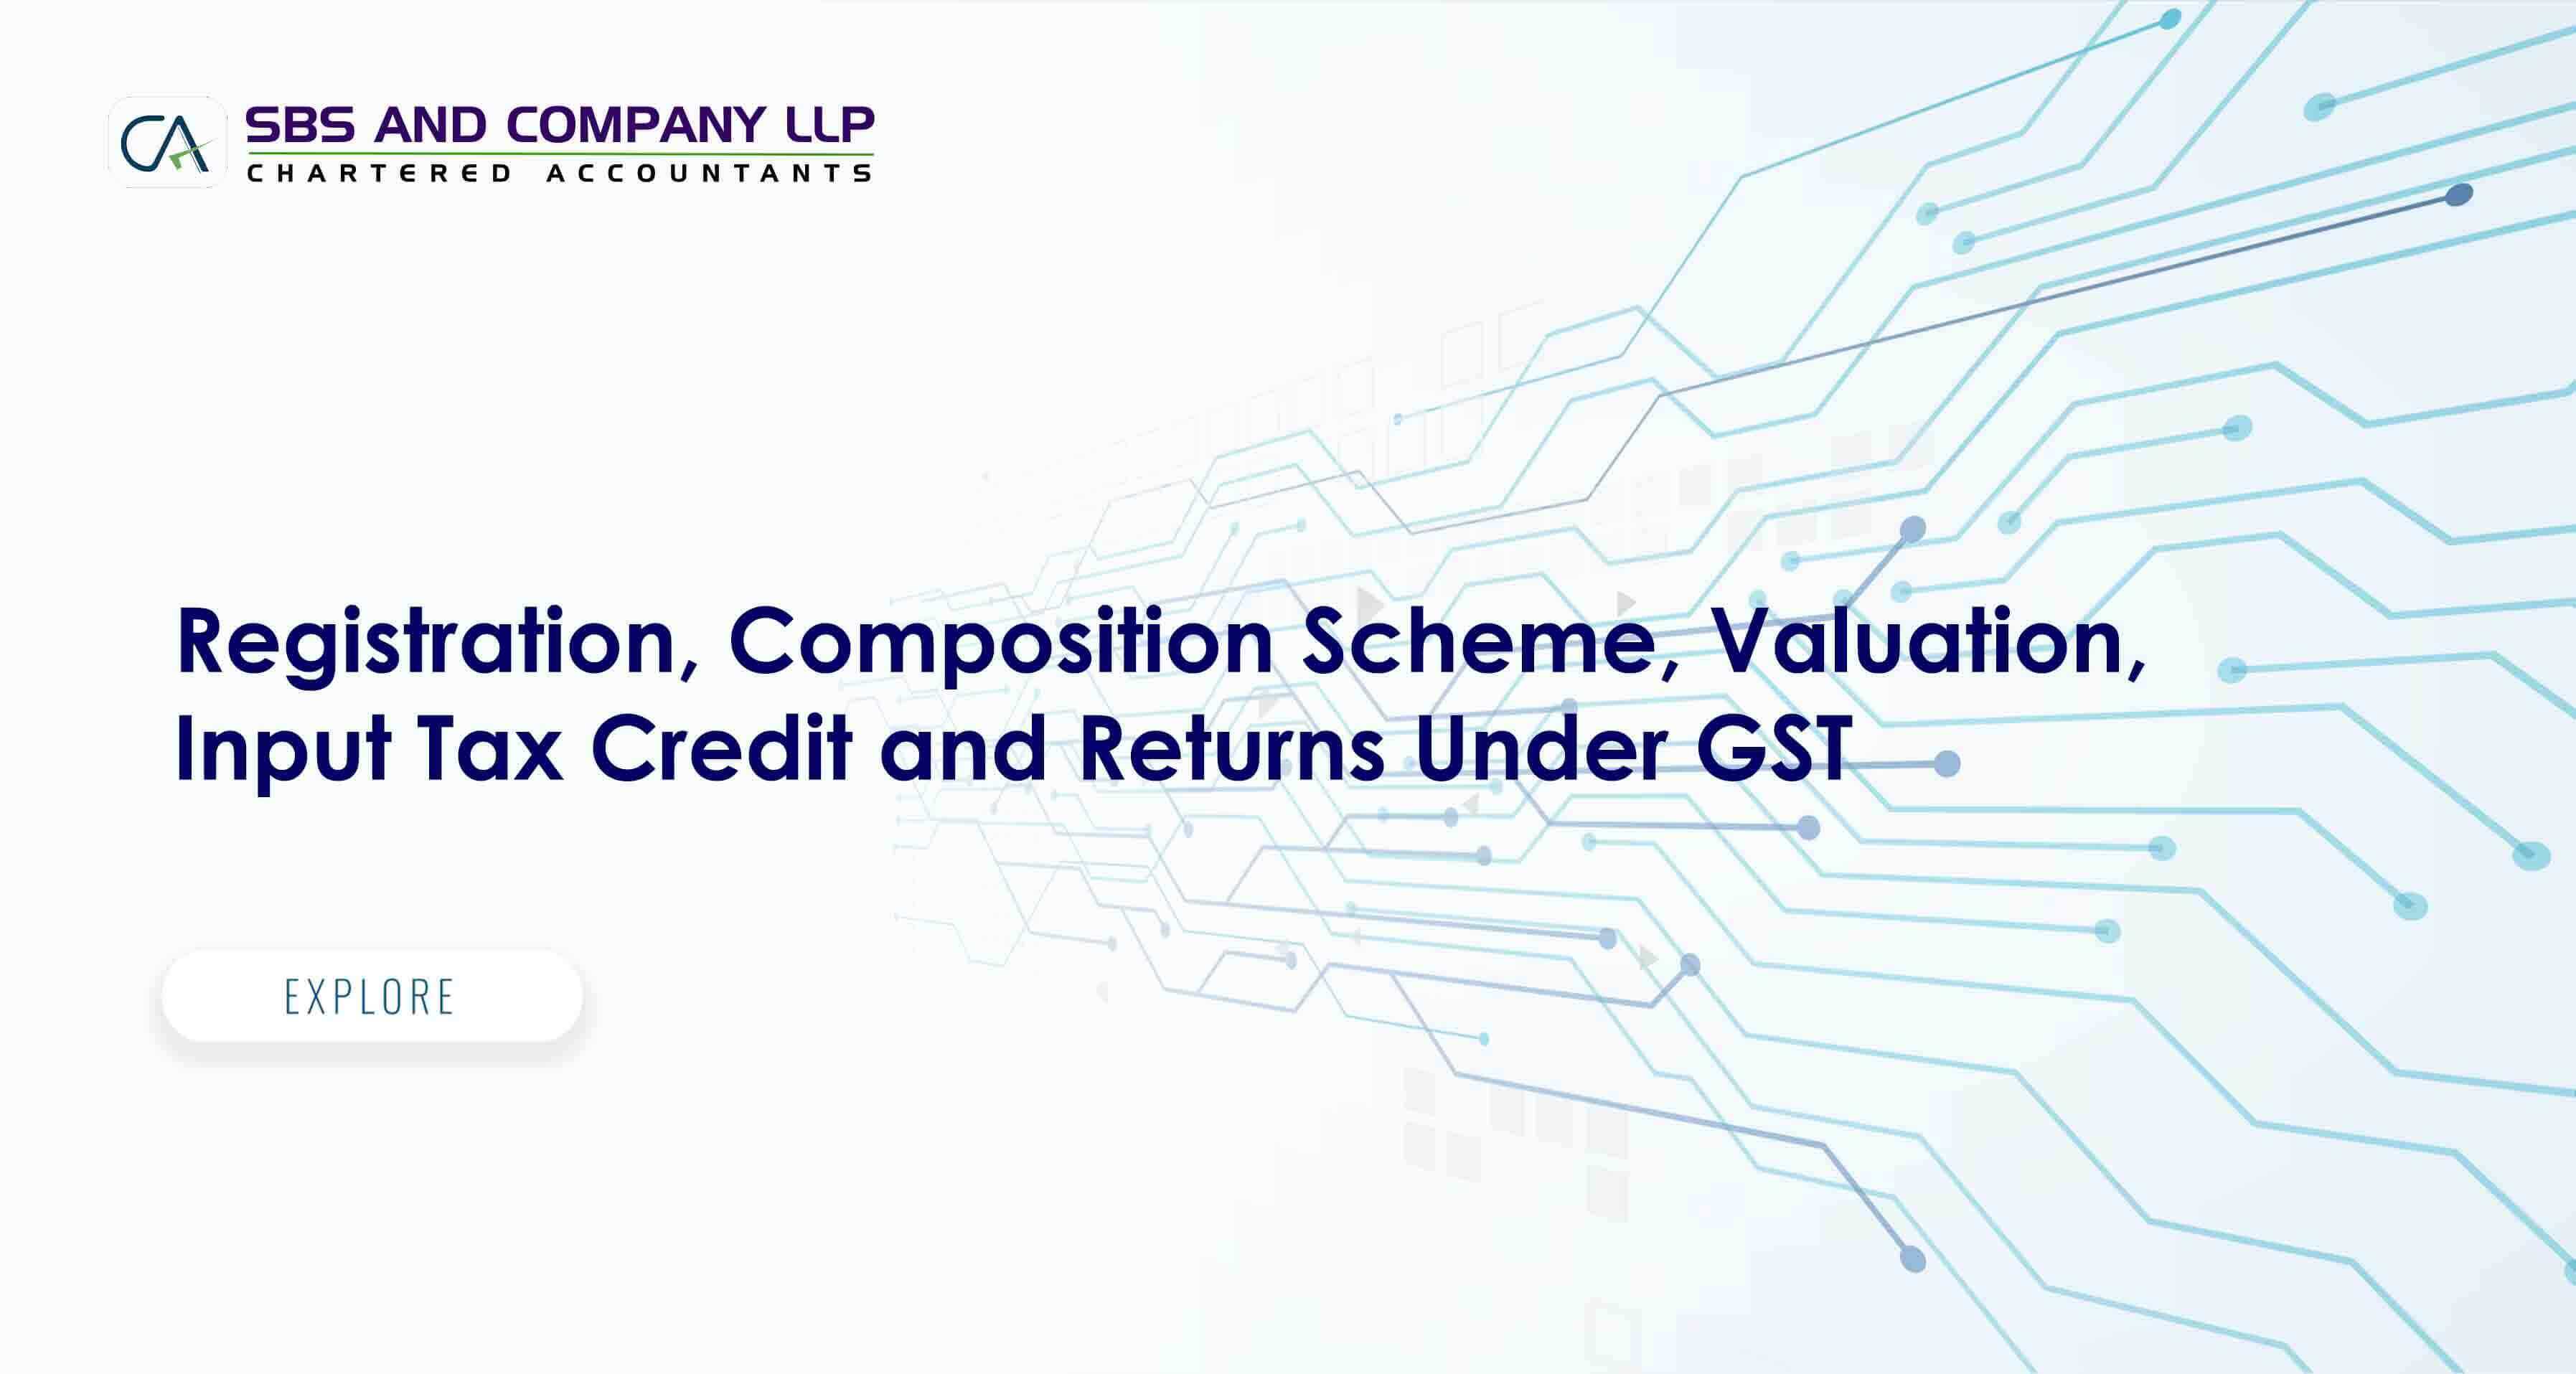 Registration, Composition Scheme, Valuation, Input Tax Credit and Returns Under GST